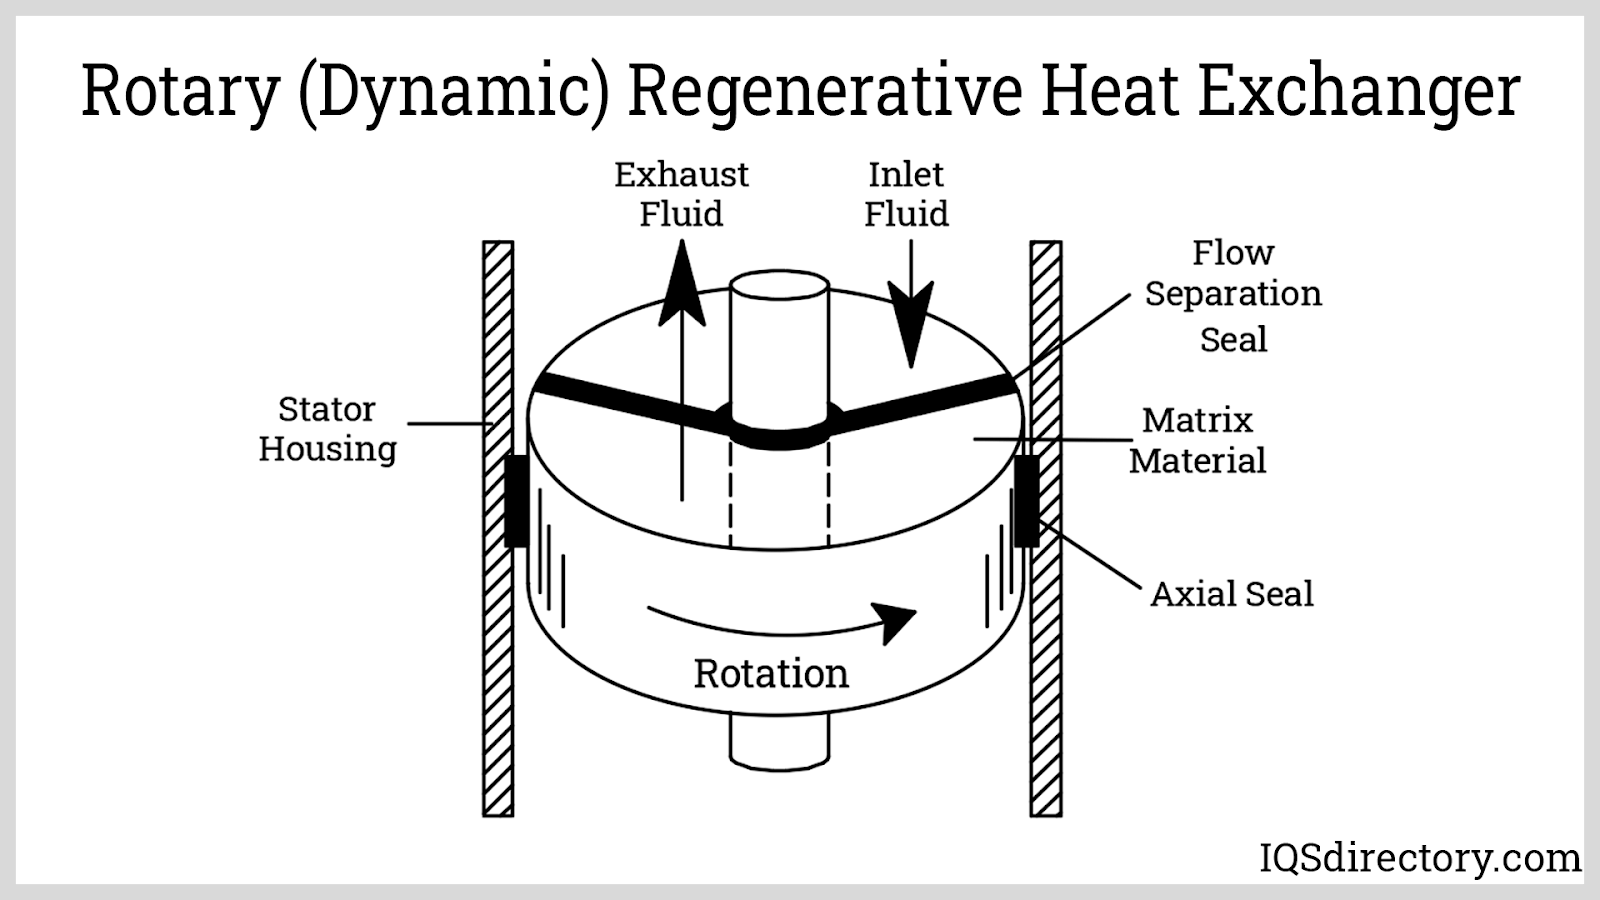 Rotary (Dynamic) Regenerative Heat Exchanger